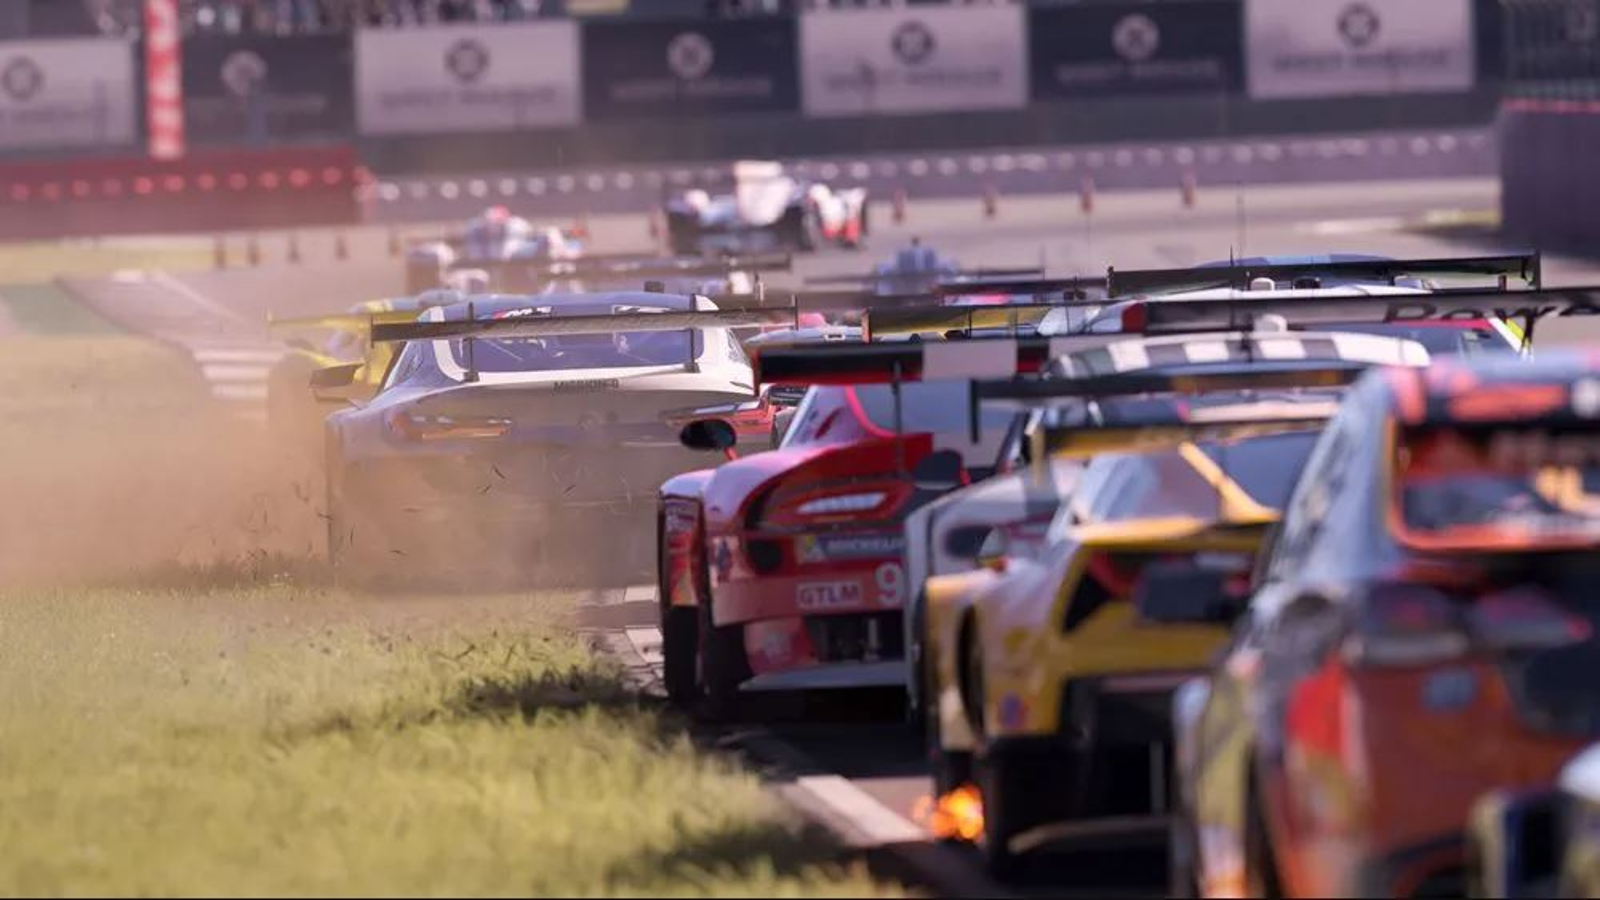 Forza Motorsport: Horizon 1 Remake Premiere Trailer! Forza